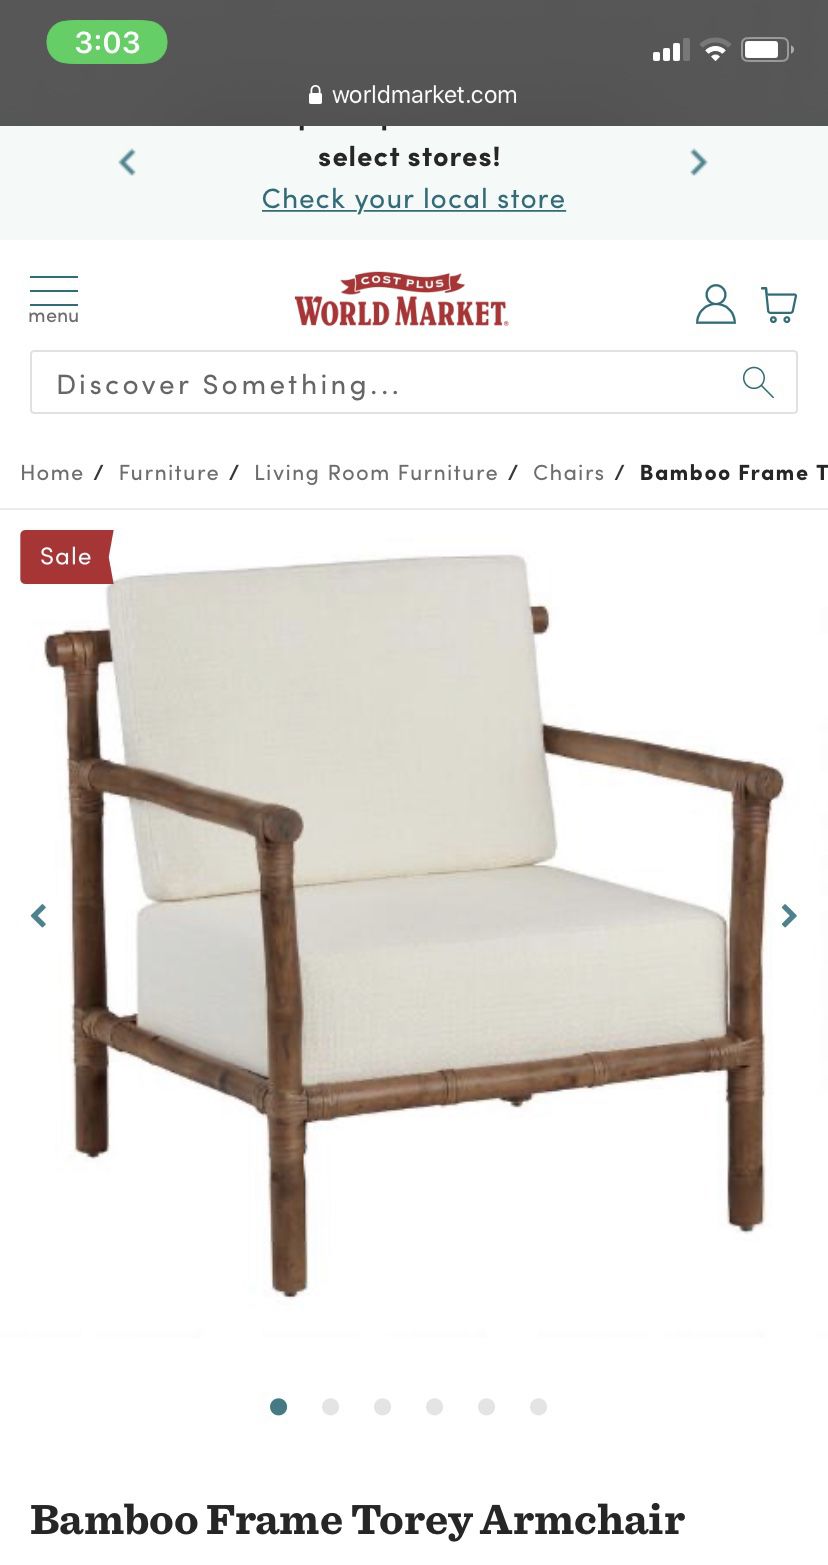 Bamboo Frame Torey Armchair from World Market - Brand New!